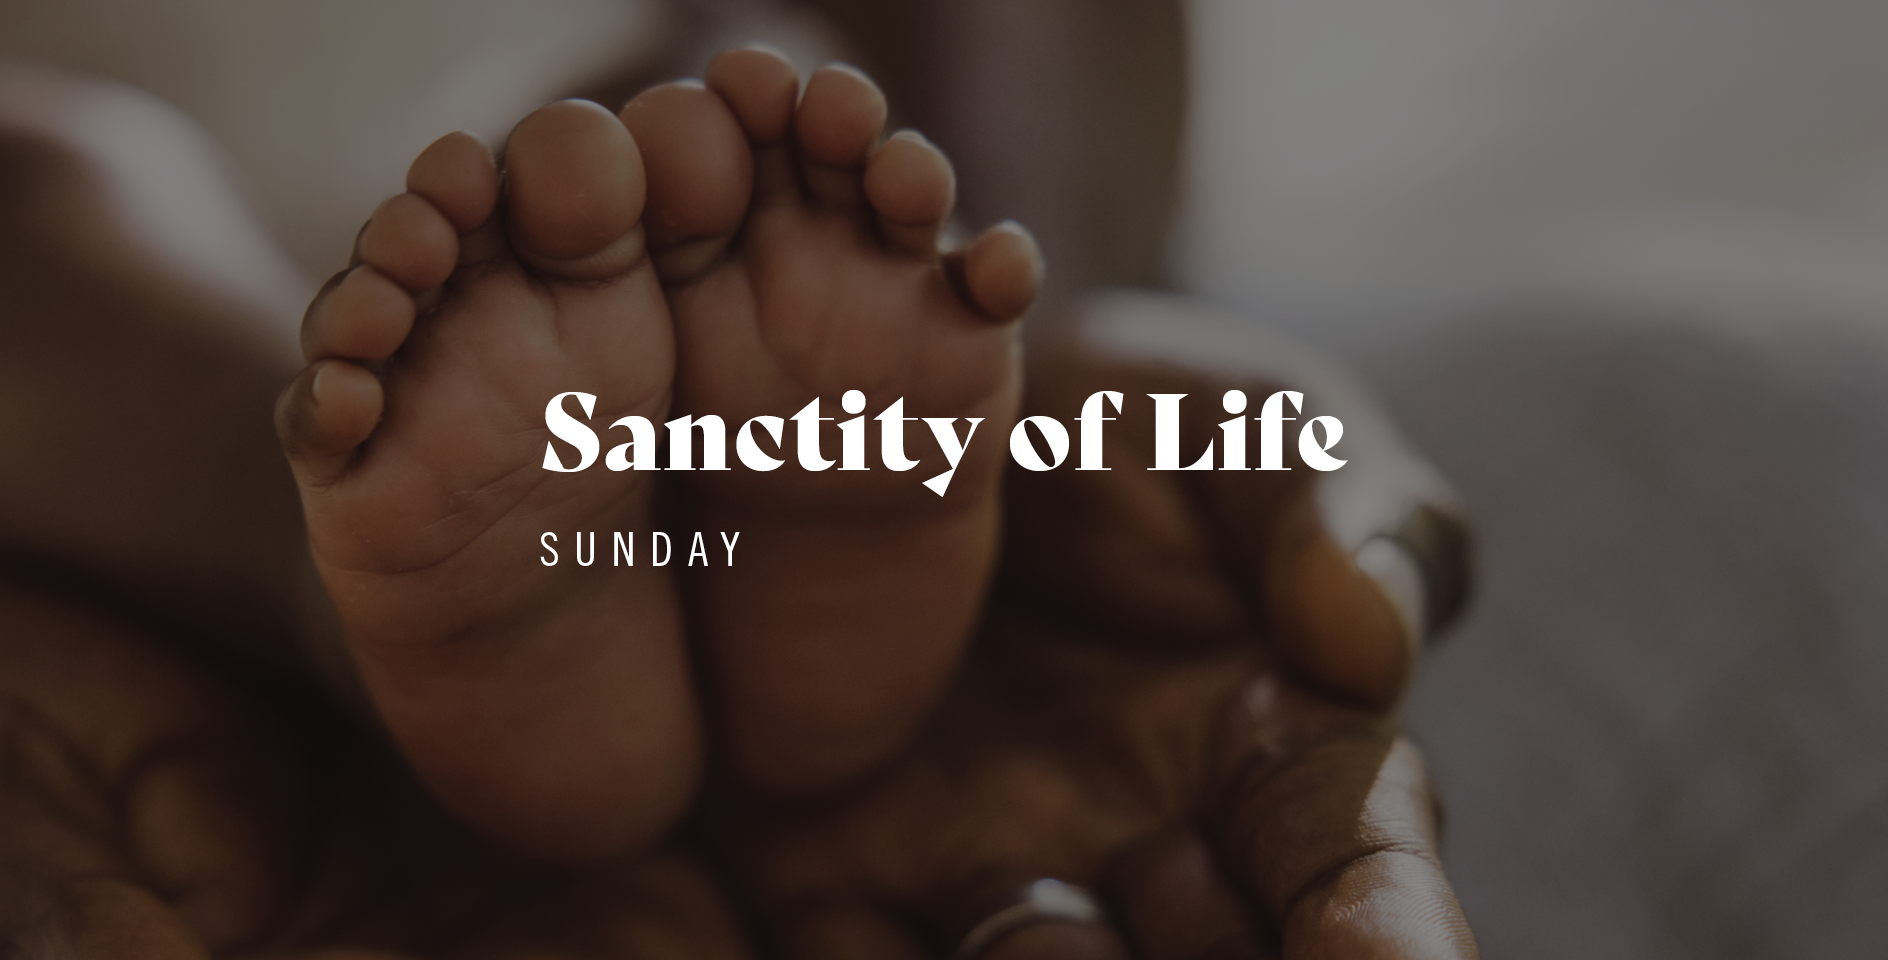 Sanctity of Life Sunday bulletin insert